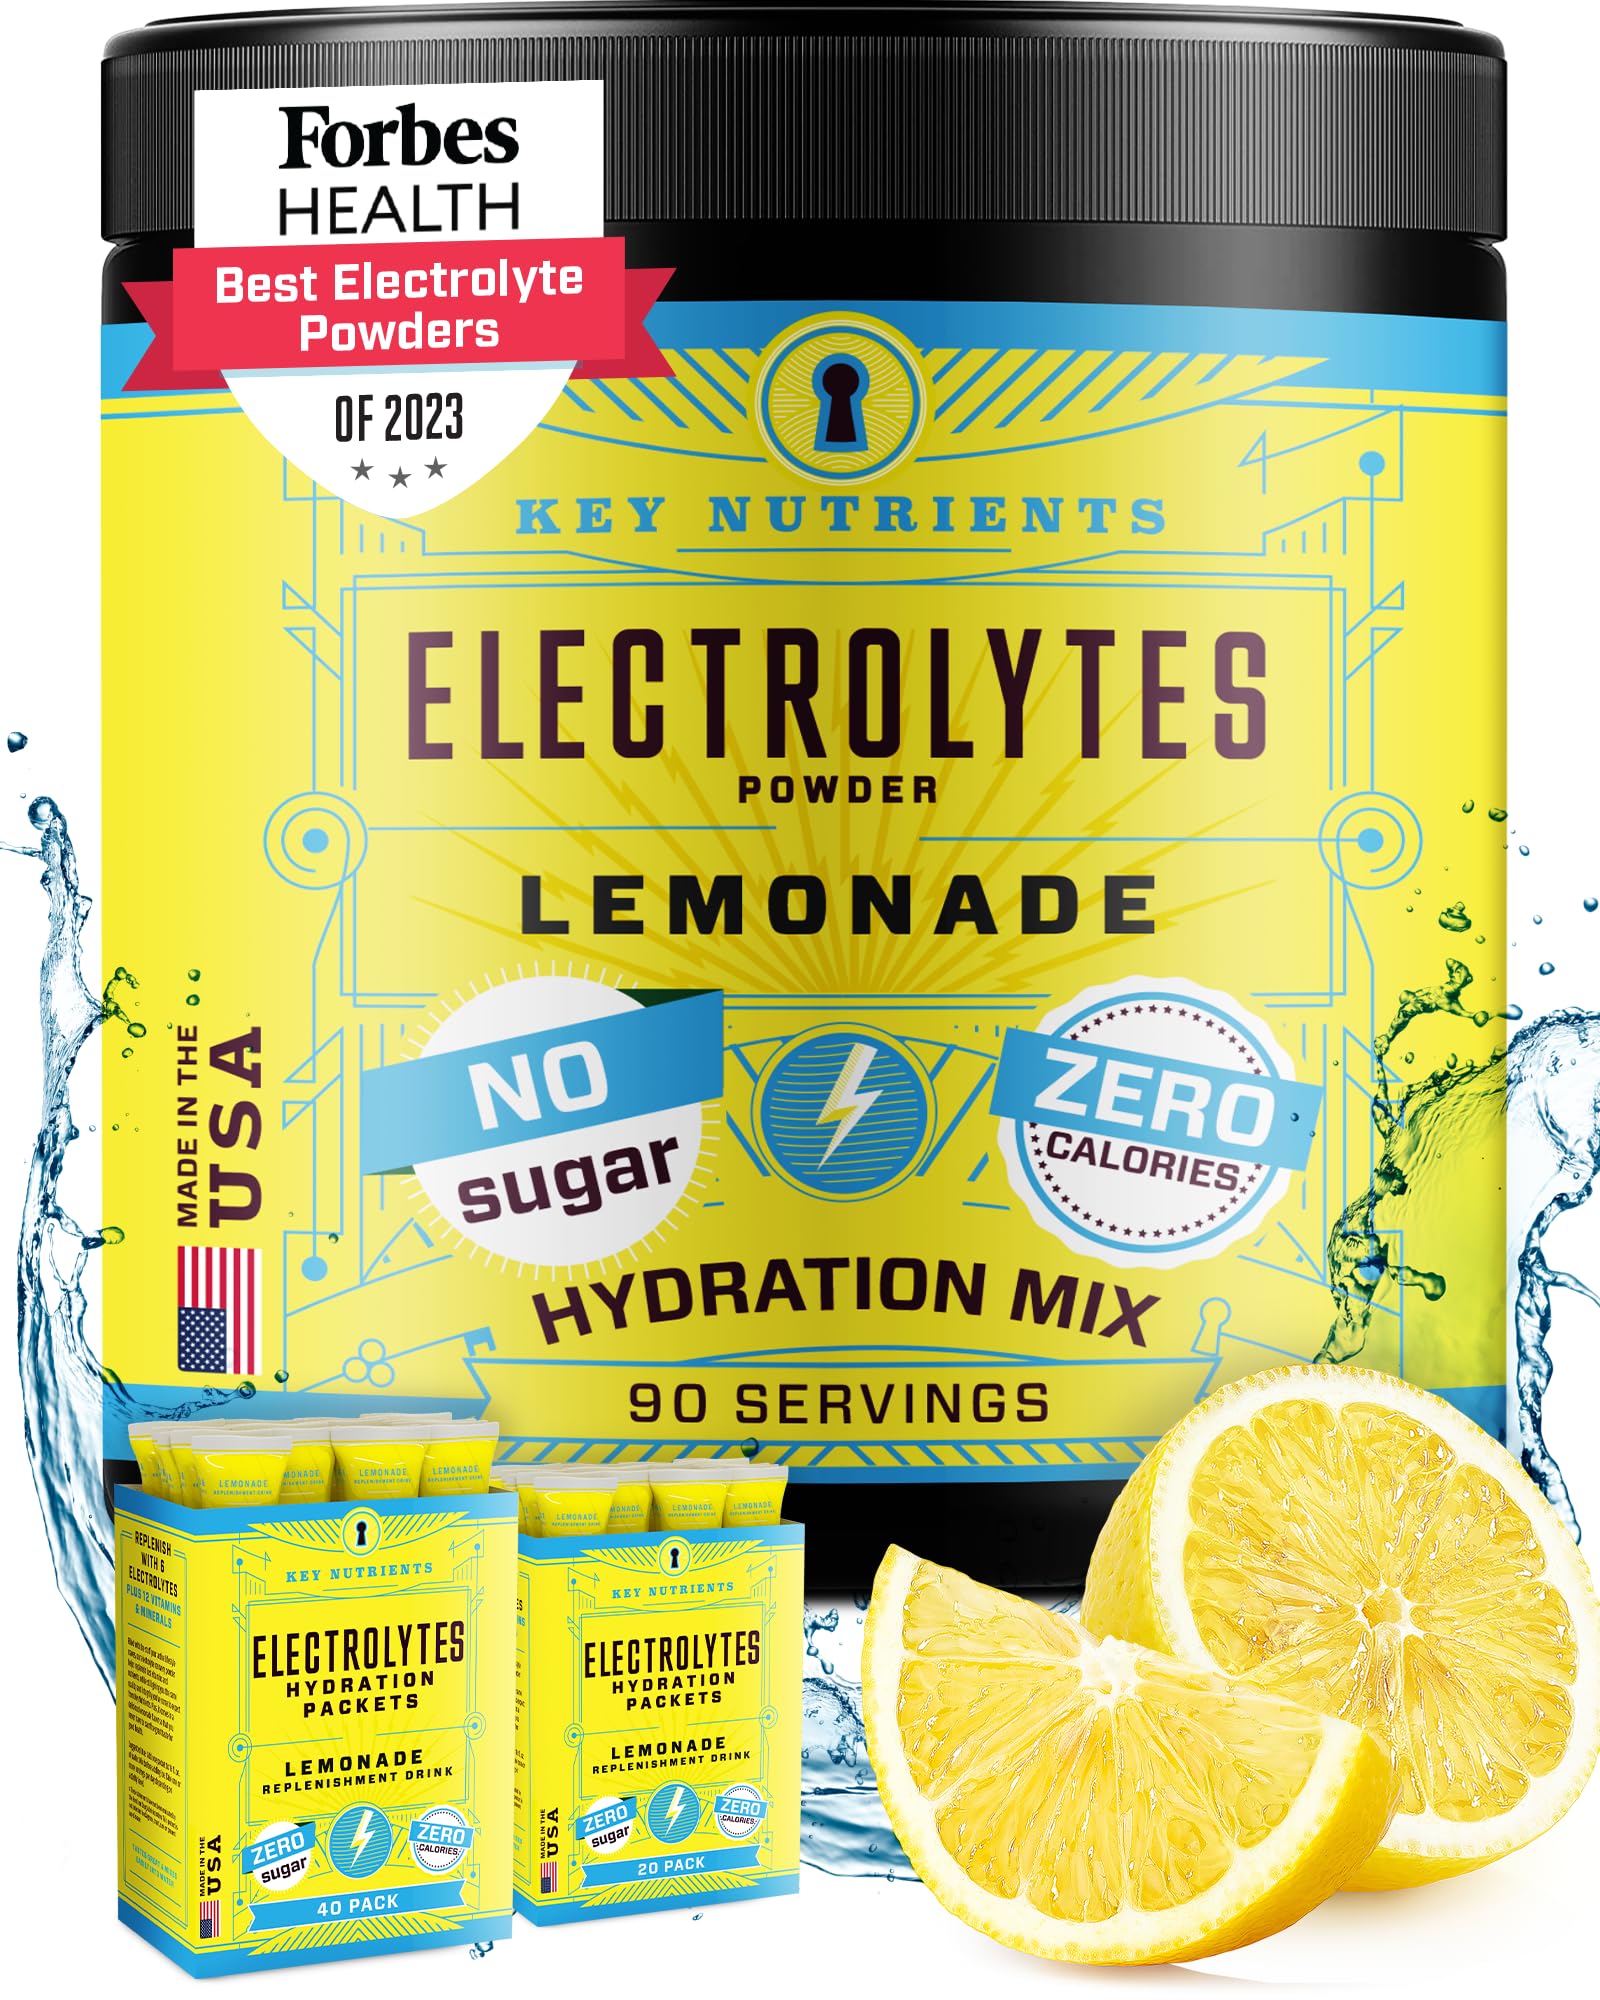 KEY NUTRIENTS Electrolytes Powder No Sugar - Refreshing Lemonade Electrolyte Drink Mix - Hydration Powder - No Calories, Gluten Free - Powder and Packets (20, 40 or 90 Servings)